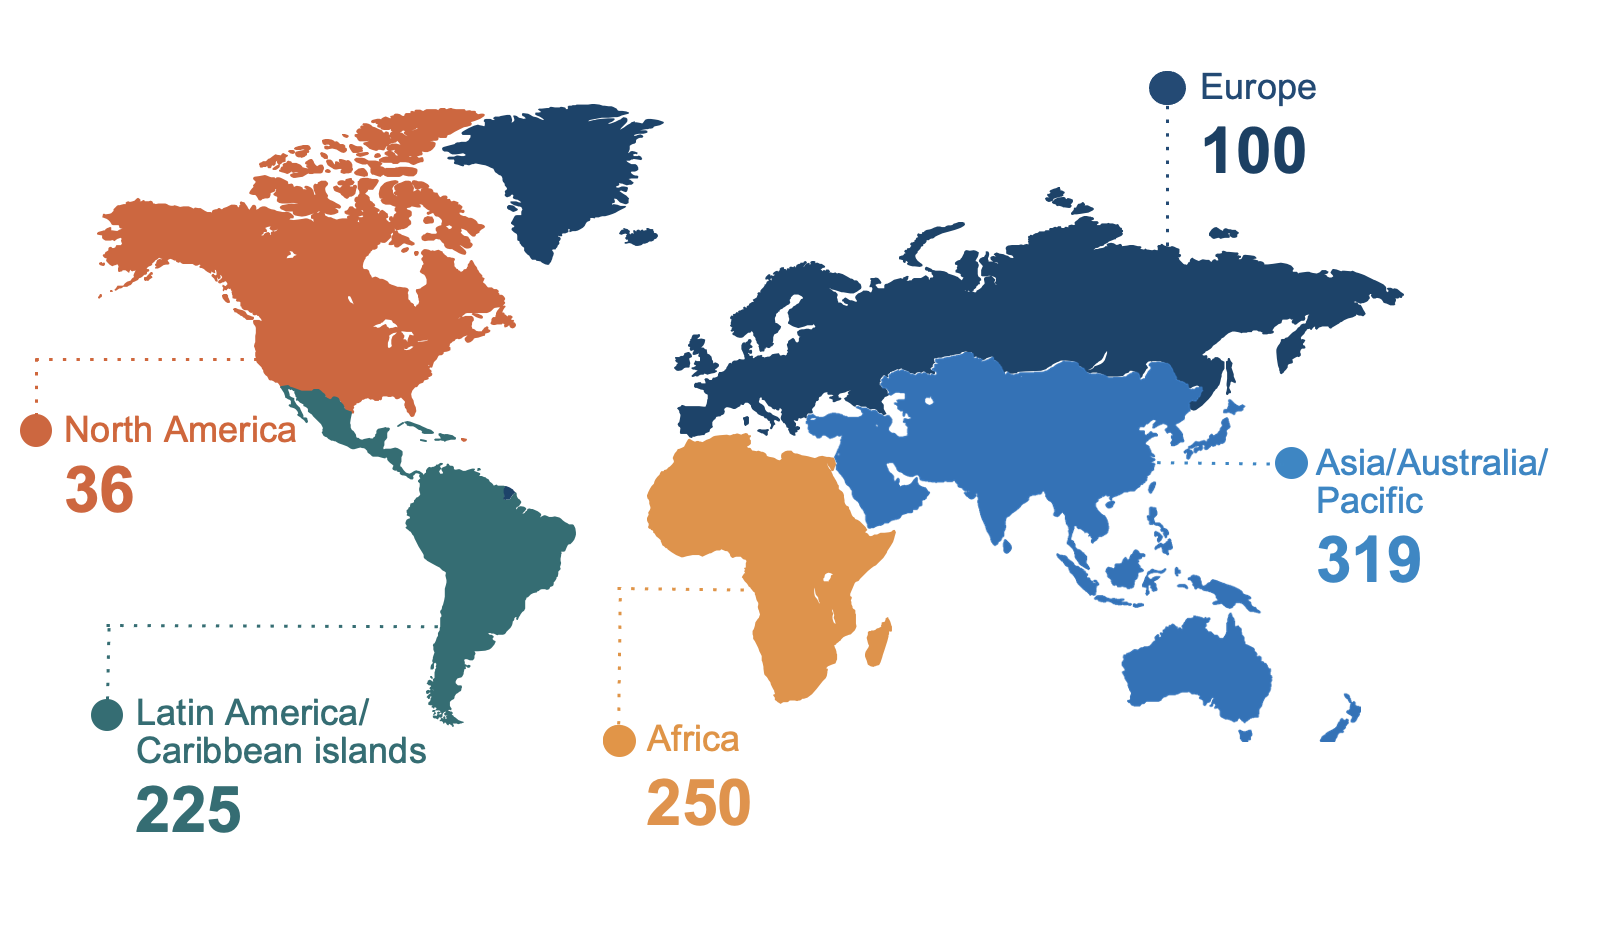 Number of Fellows per region: Europe: 100; Asia/Australia/Pacific: 319; Africa: 250; Latin America/Caribbean islands: 225; North America: 36